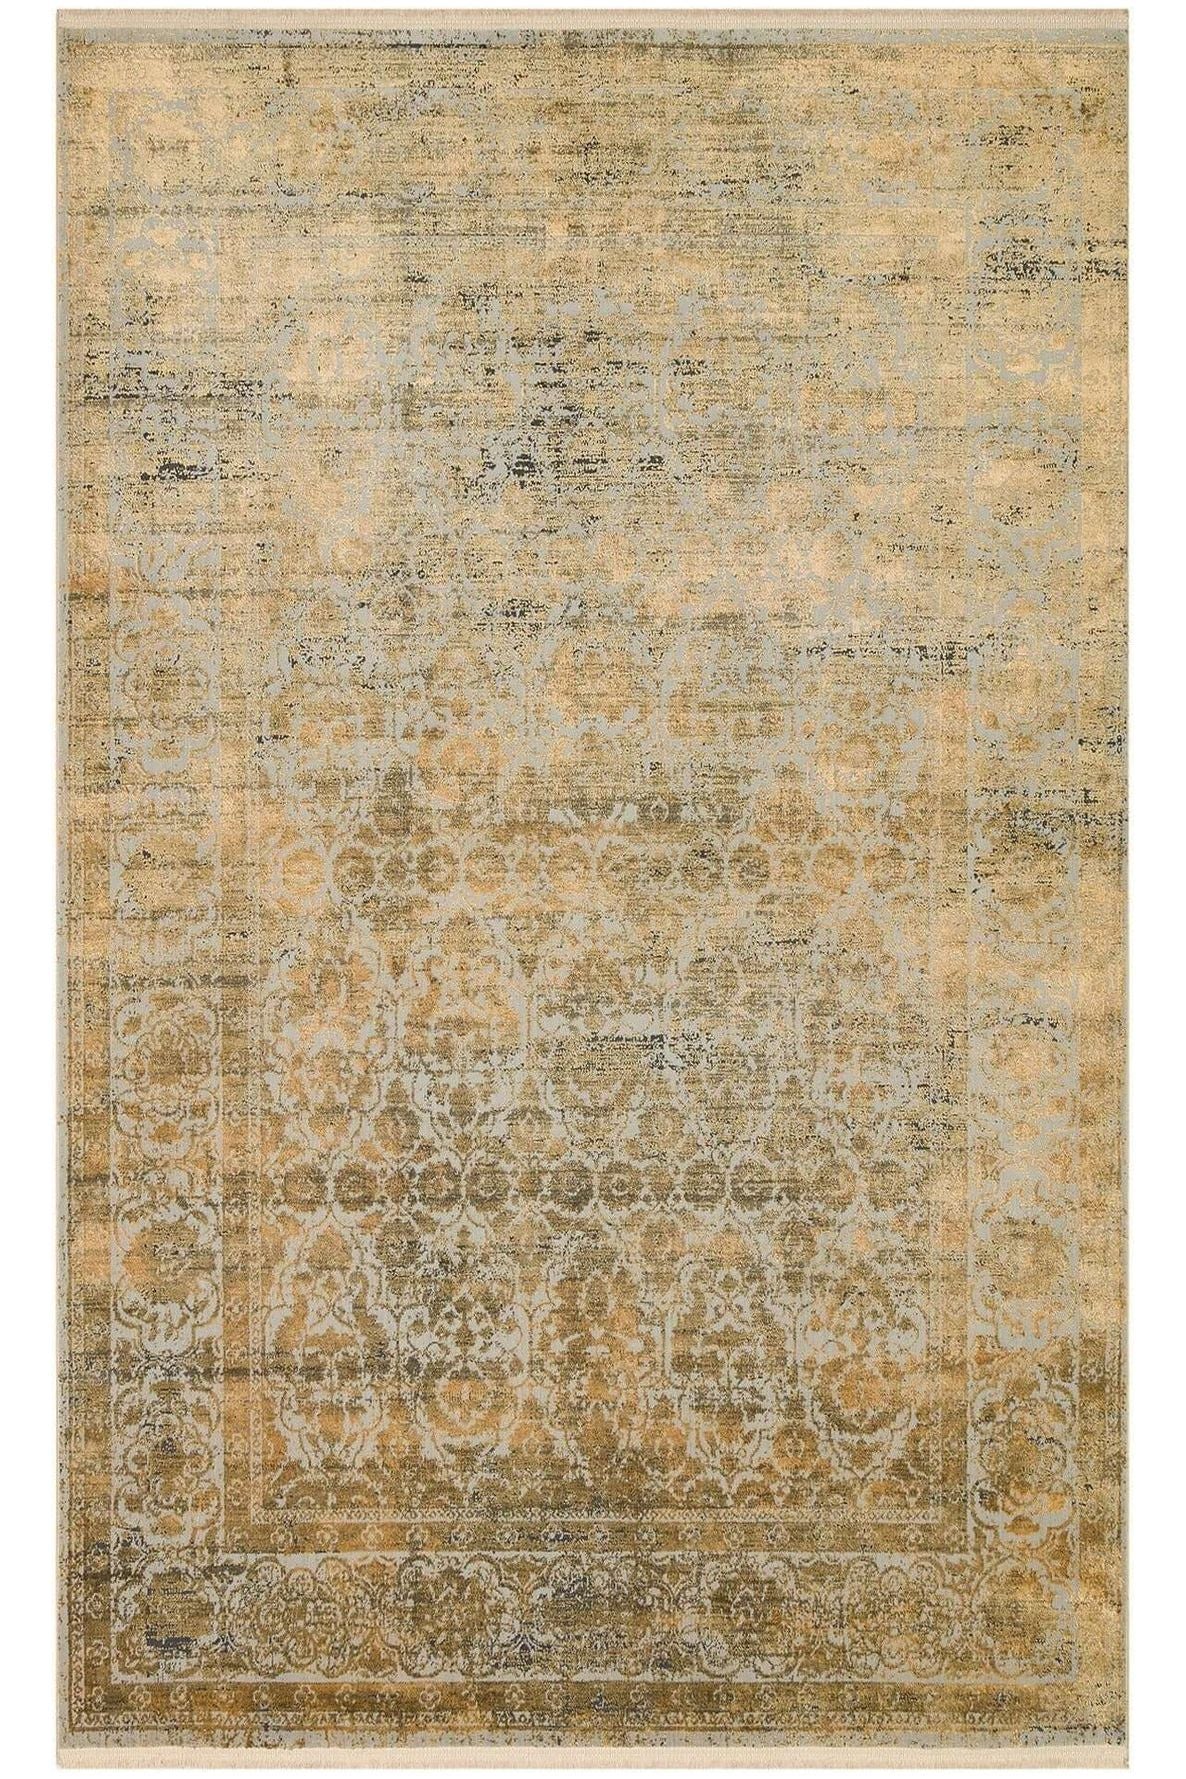 #Turkish_Carpets_Rugs# #Modern_Carpets# #Abrash_Carpets#Vrd 01 Antik Gold